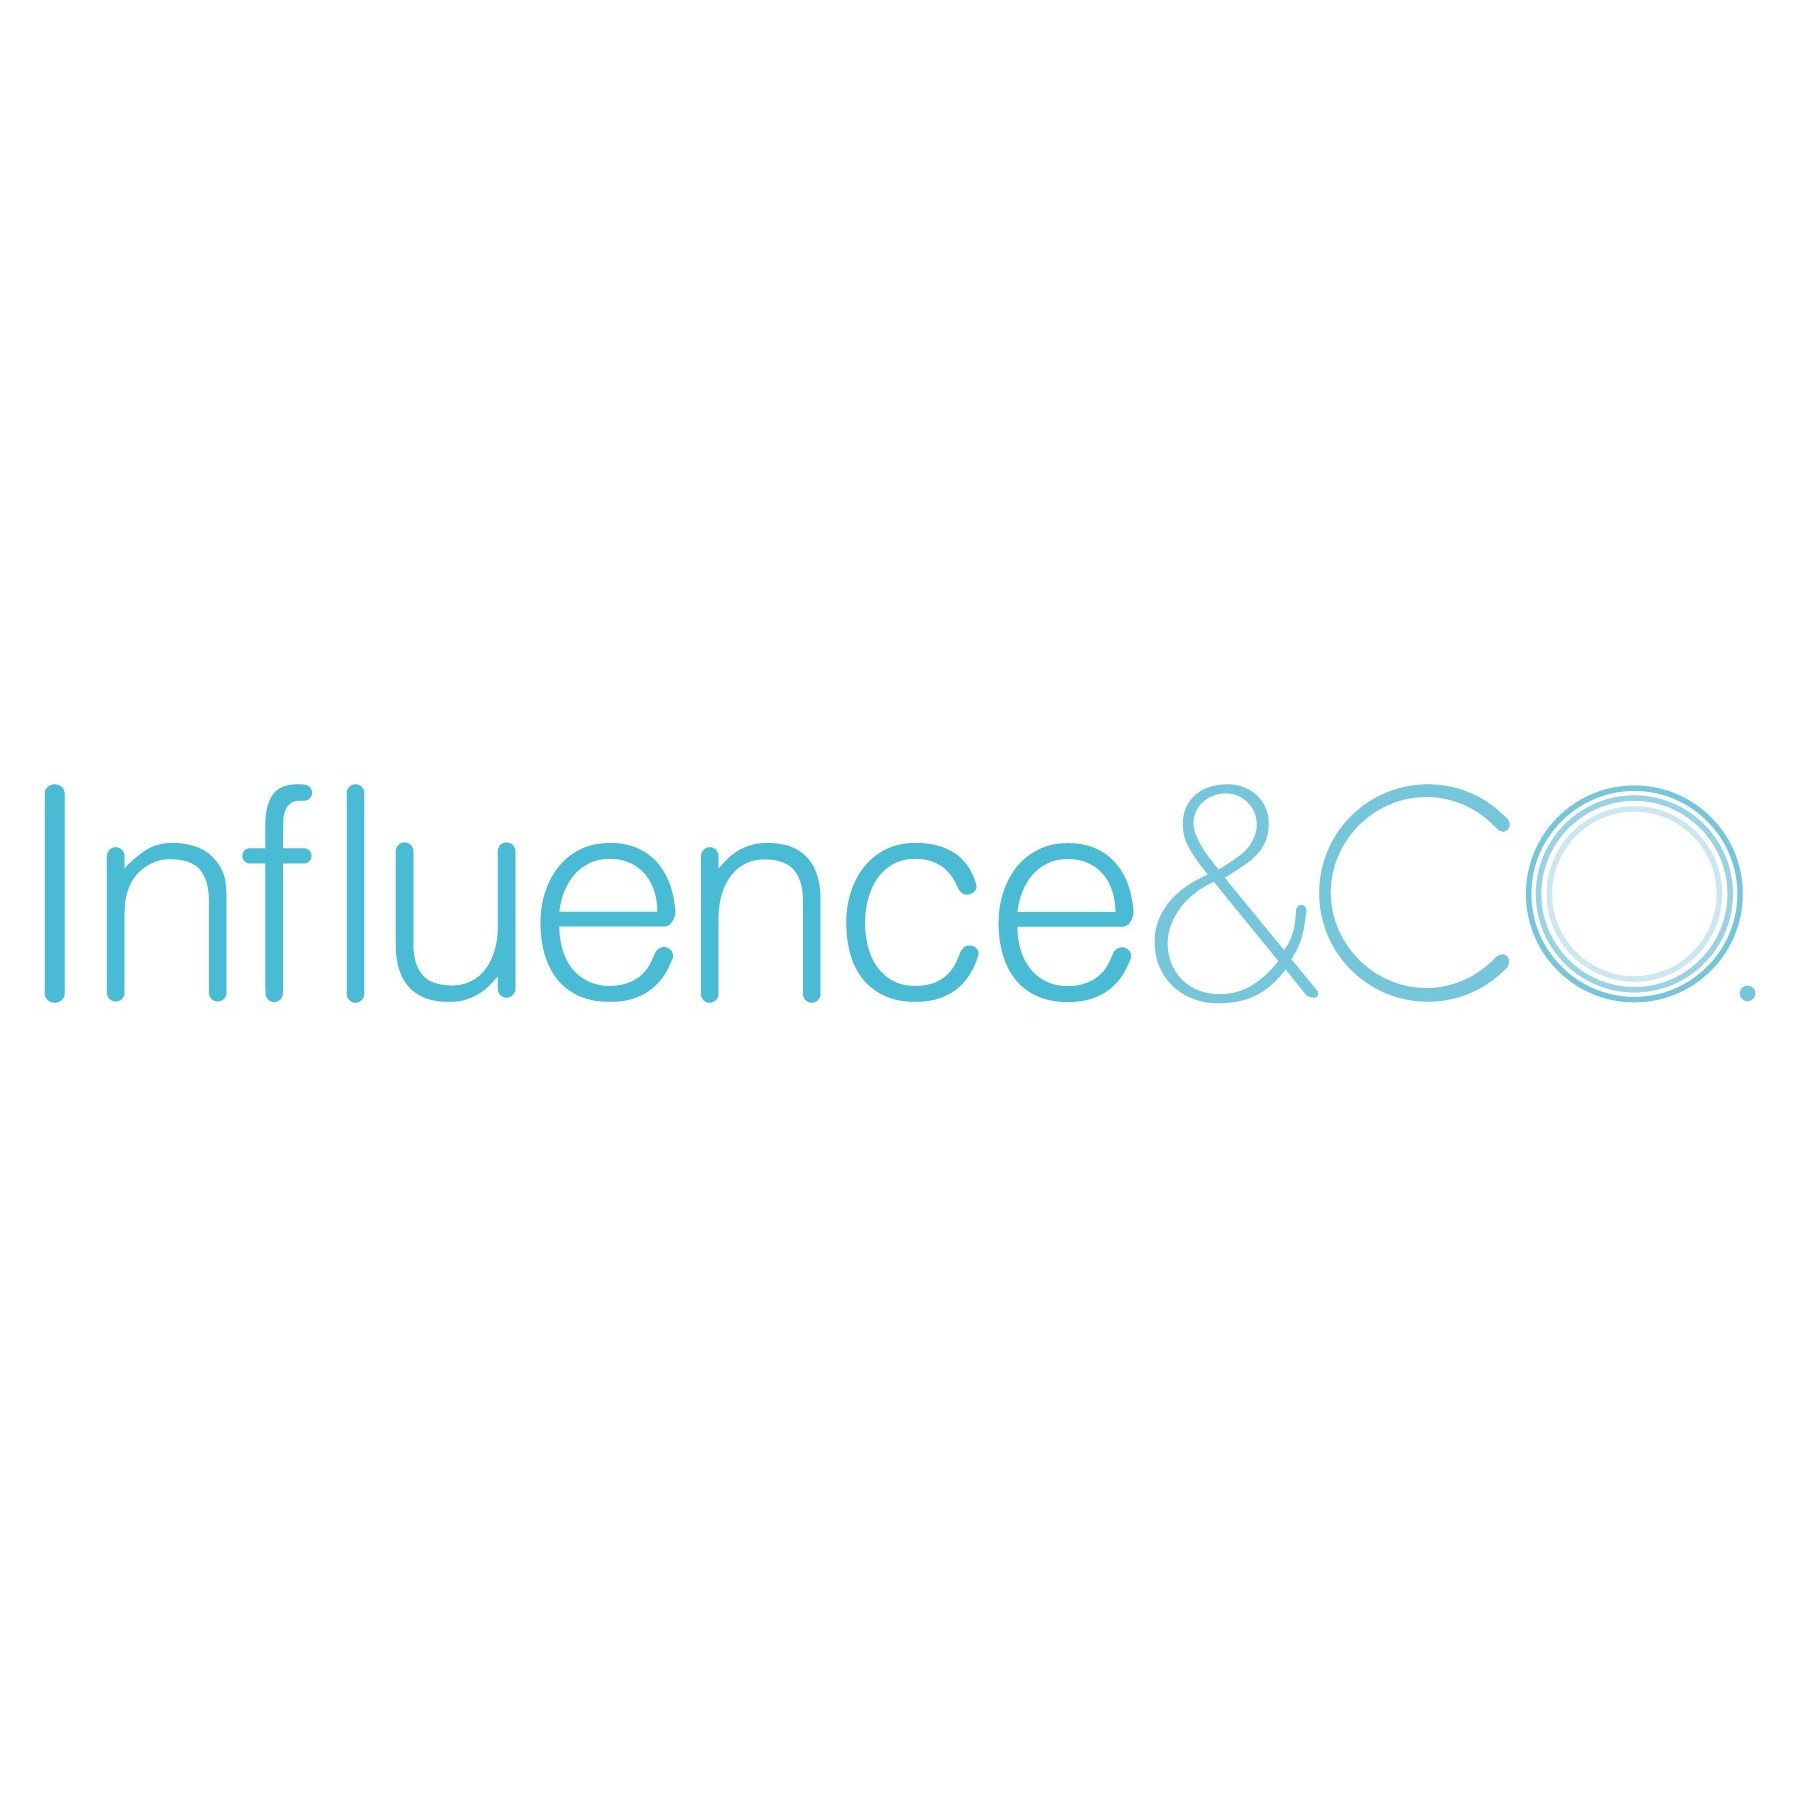 Influence&co-logo